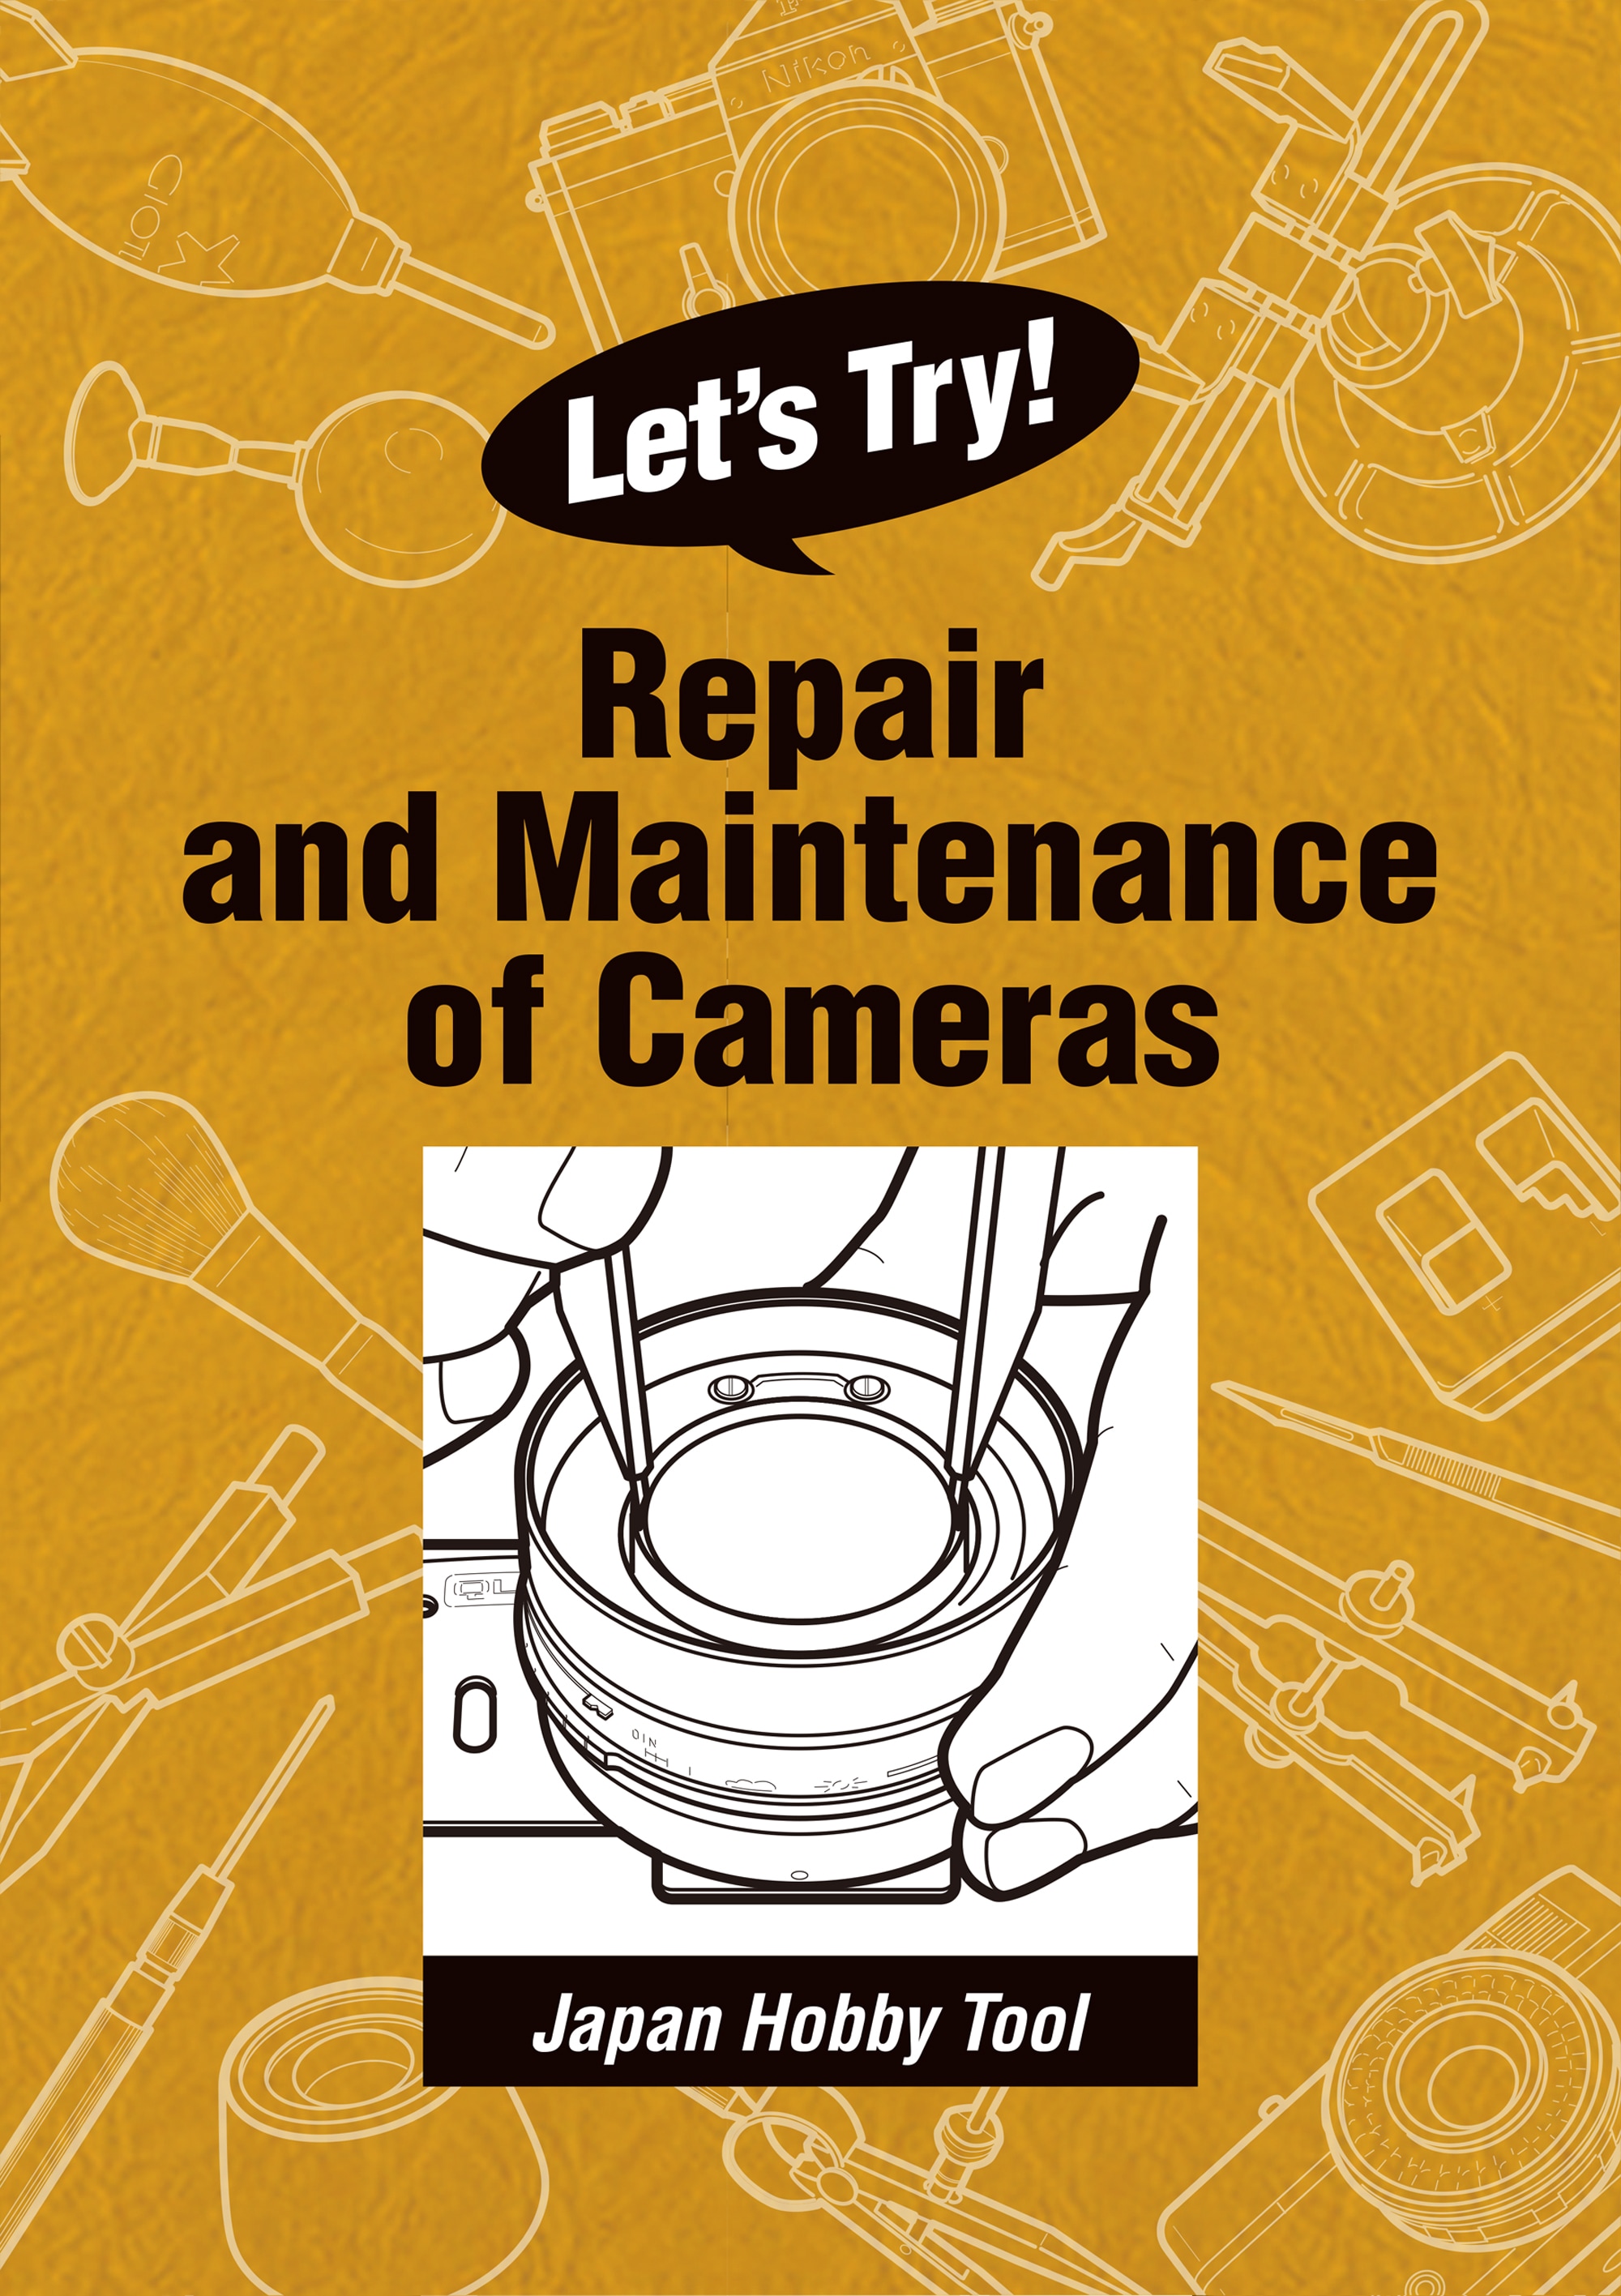 Japan Hobby Tool Camera Repair Tool Kit A JHT9589 B&H Photo Video